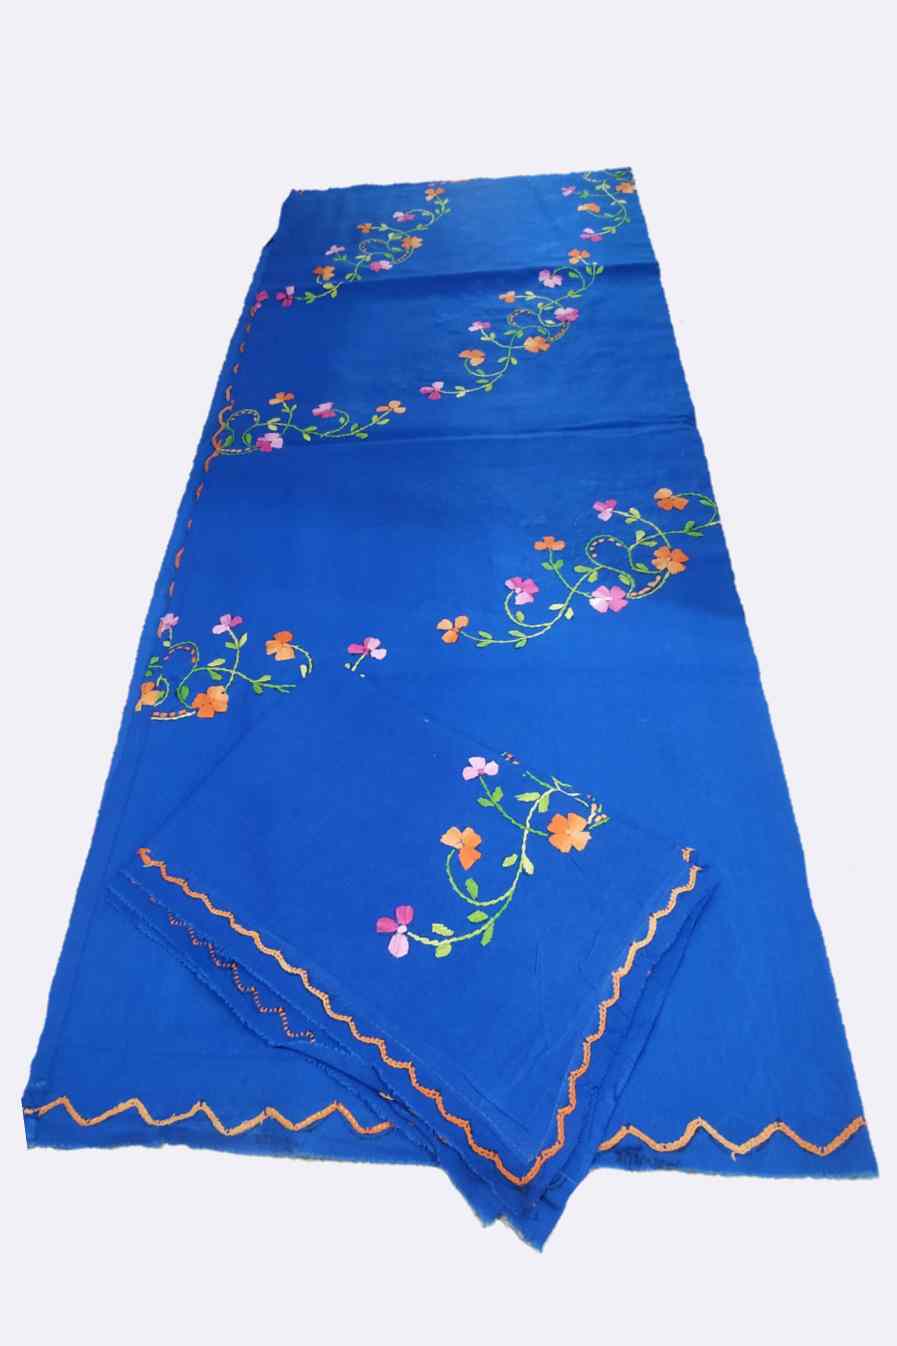 Kantha stitched bedsheet